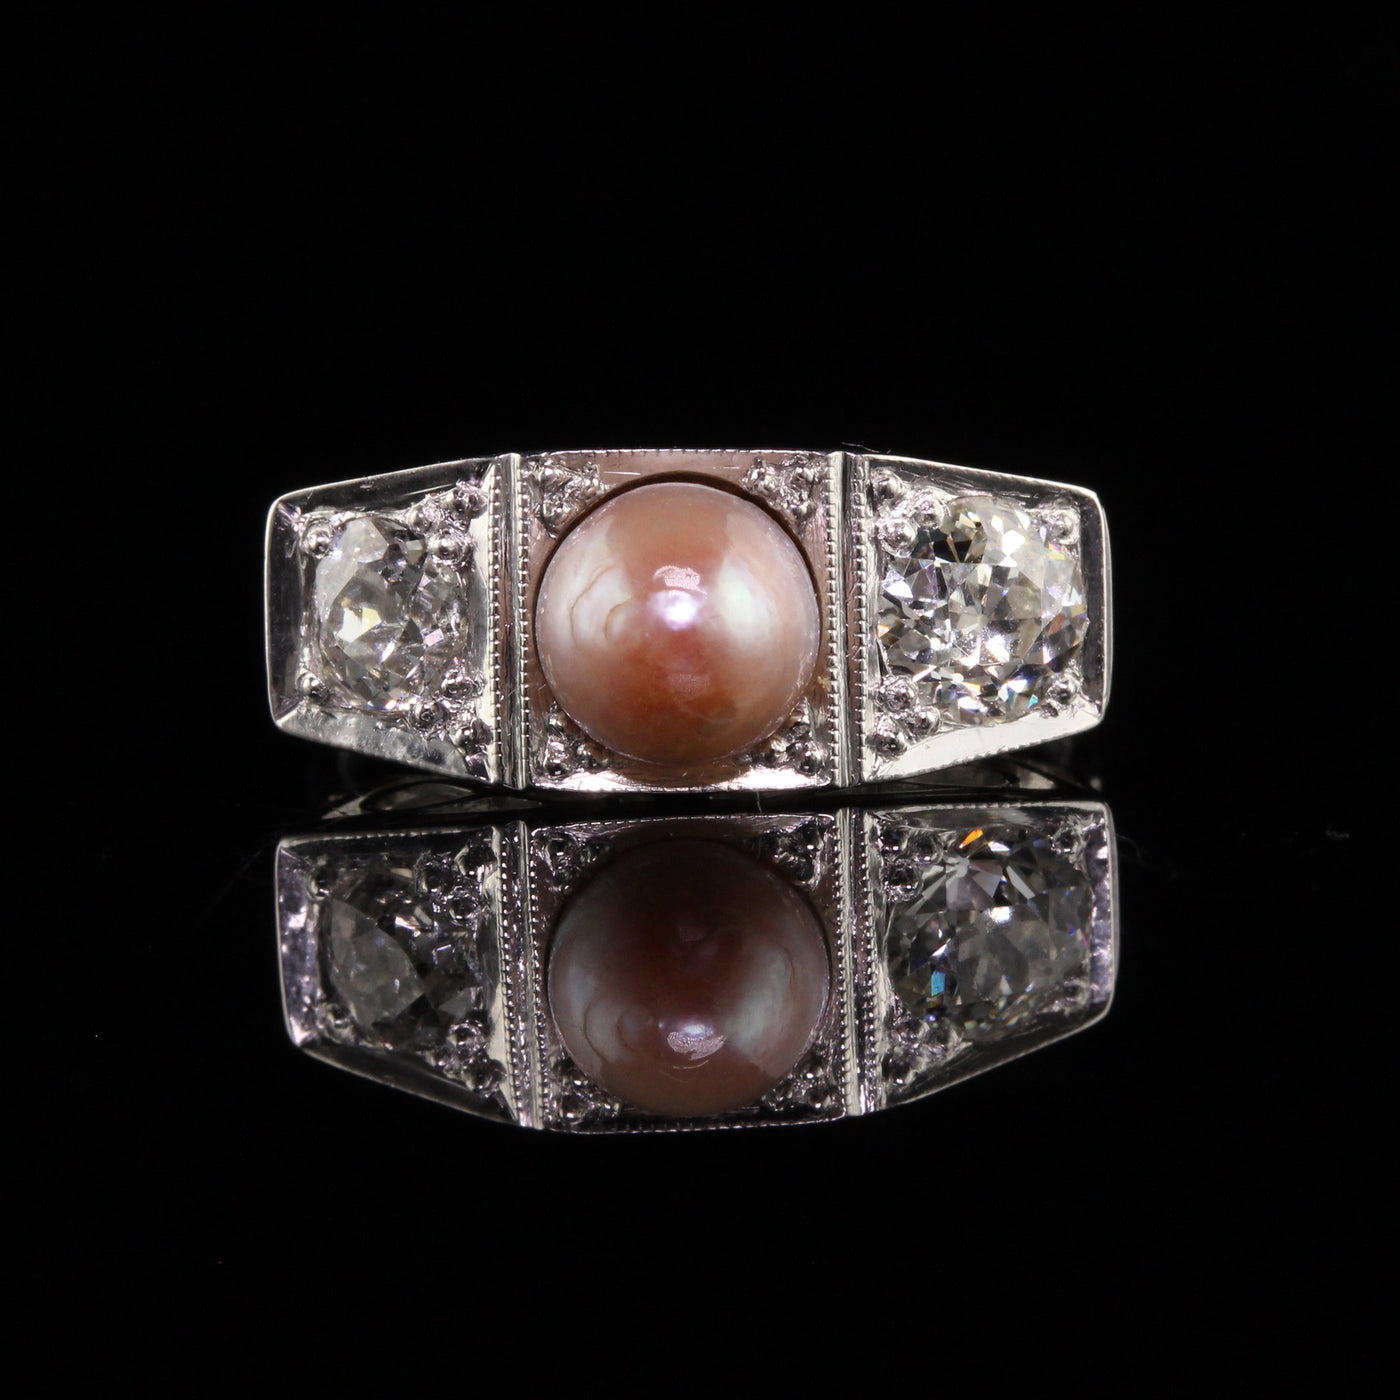 Antique Art Deco 14K White Gold Old European Diamond and Pearl Three Stone Ring